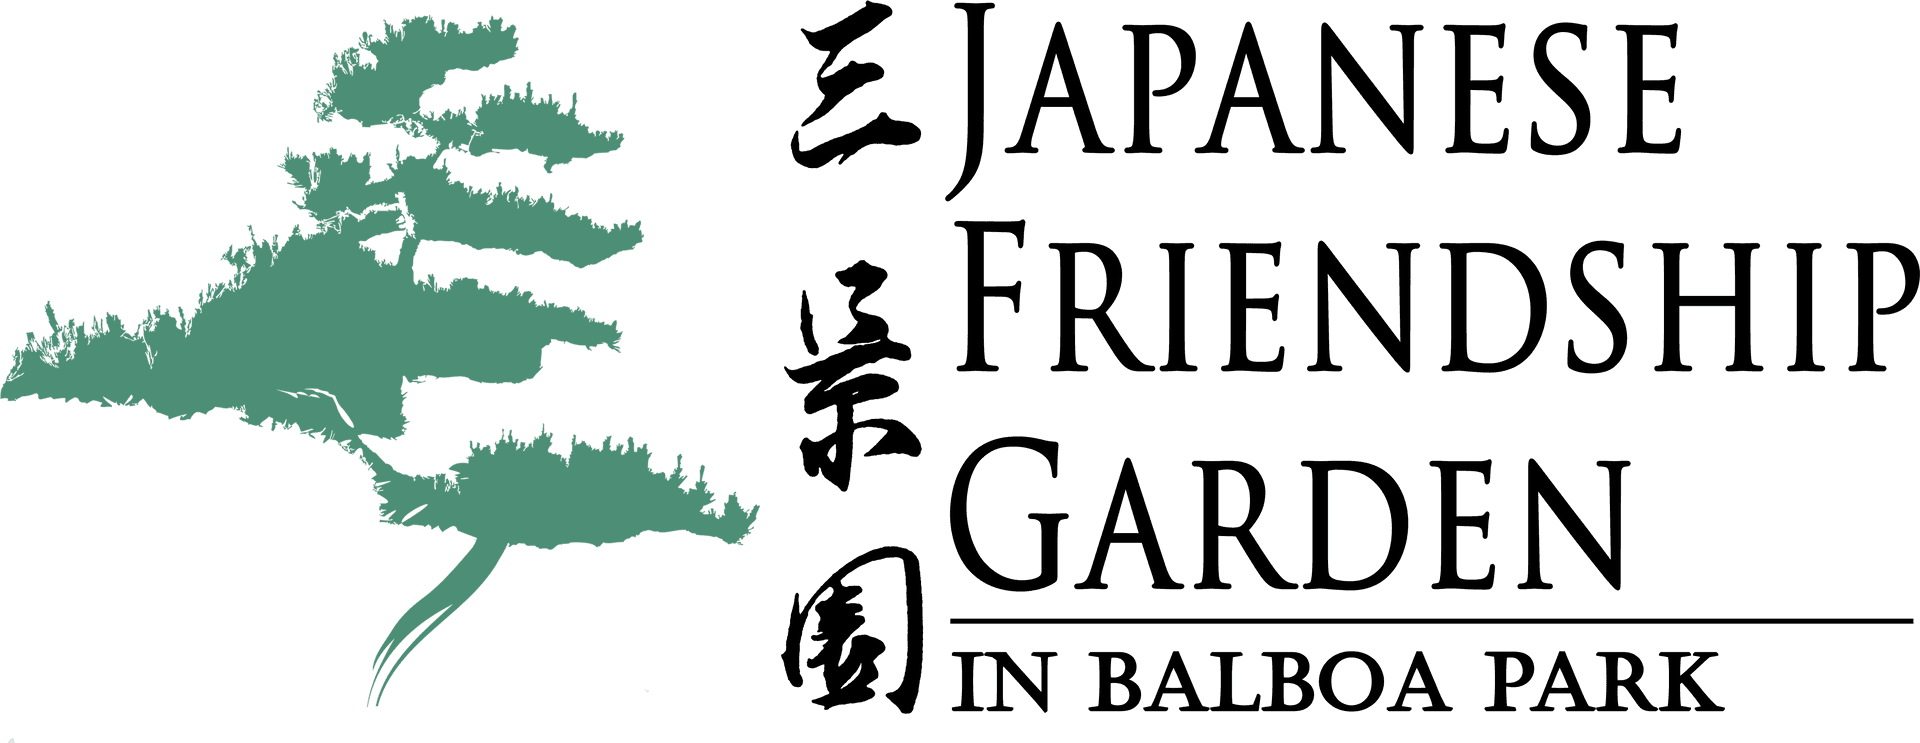 Japanese Friendship Garden Balboa Park Logo PNG